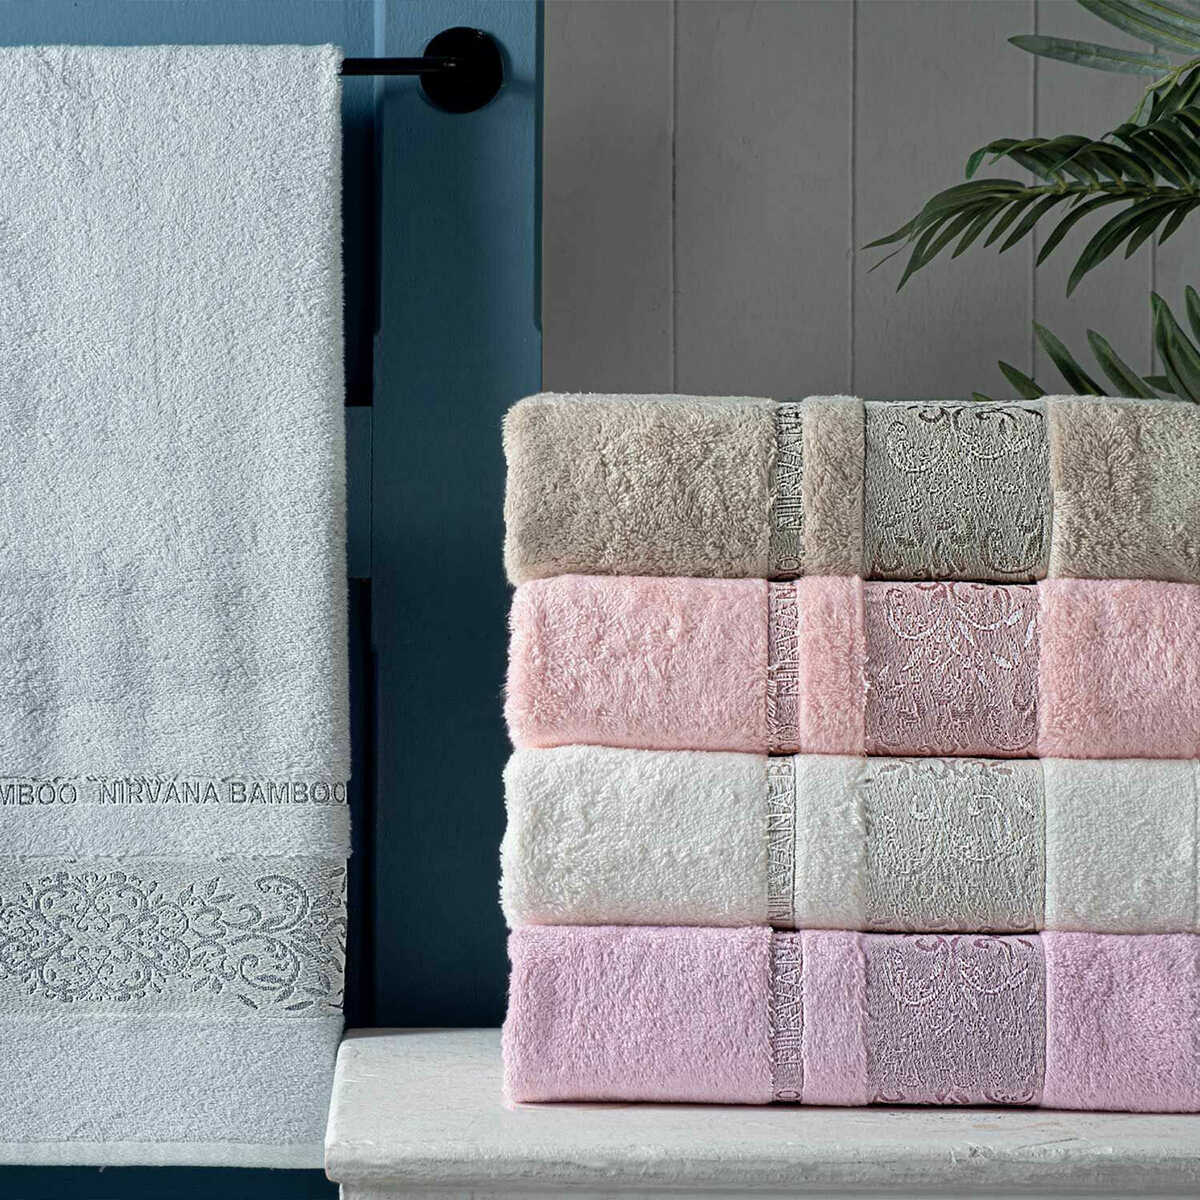 Maxstyle Nirvana Bamboo Cream Towel 50X90 cm